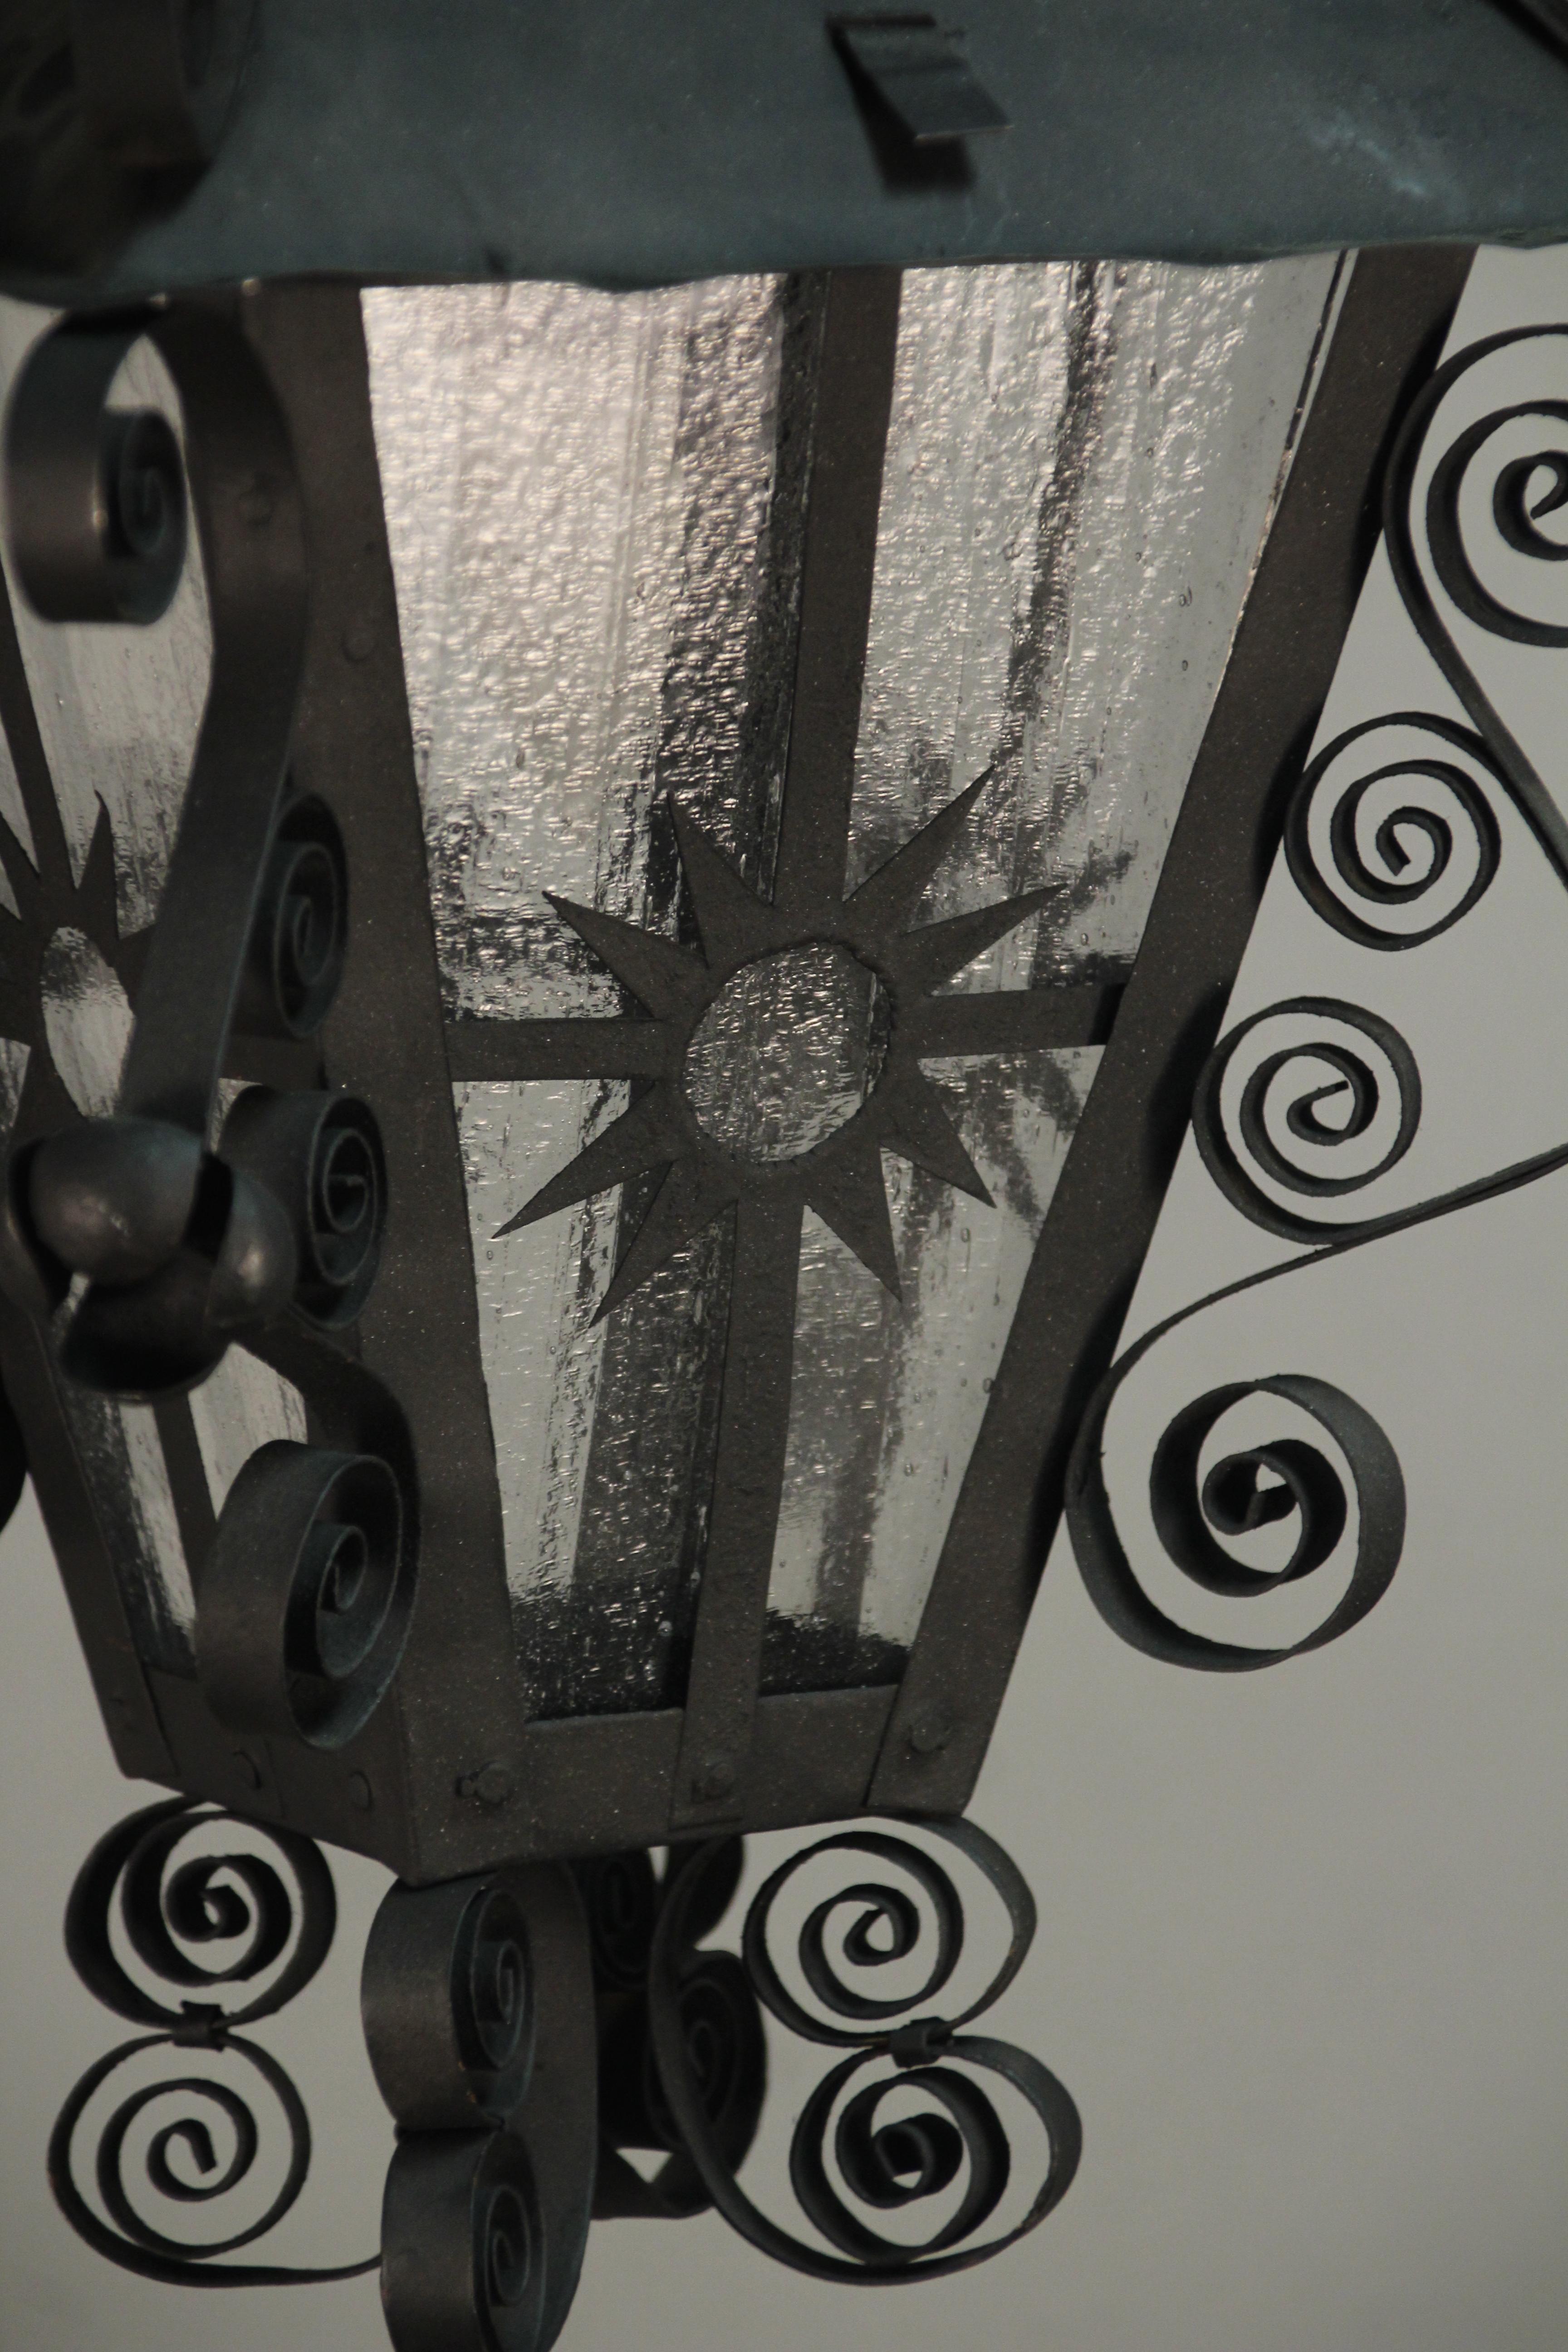 North American Spanish Revival 1930s Hanging Lantern